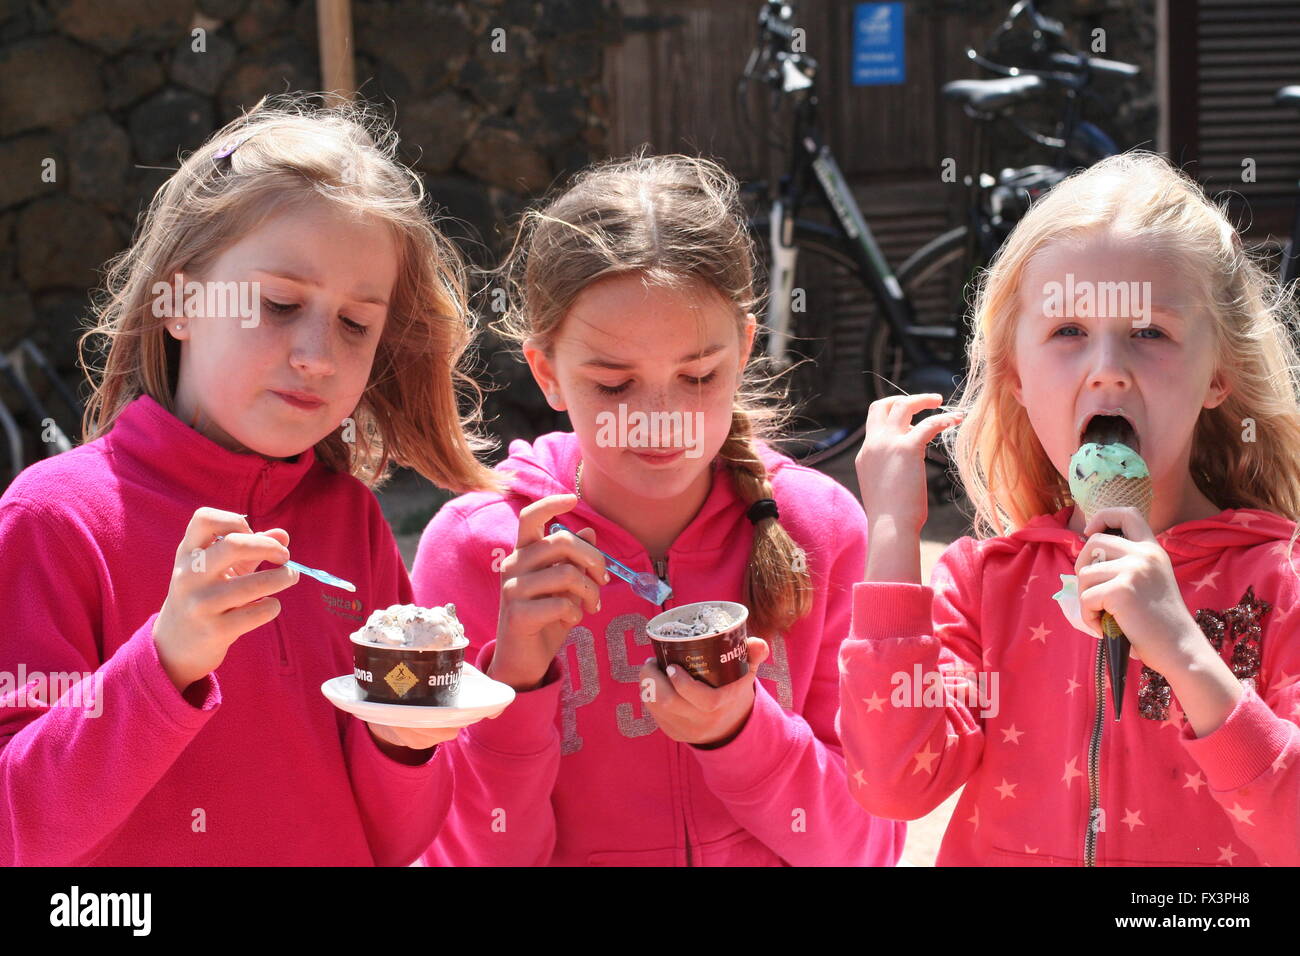 Children enjoying eating ice cream cone on a warm sunny day, three girls enjoying icecream, best life, contentment, happiness is, satisfaction Stock Photo